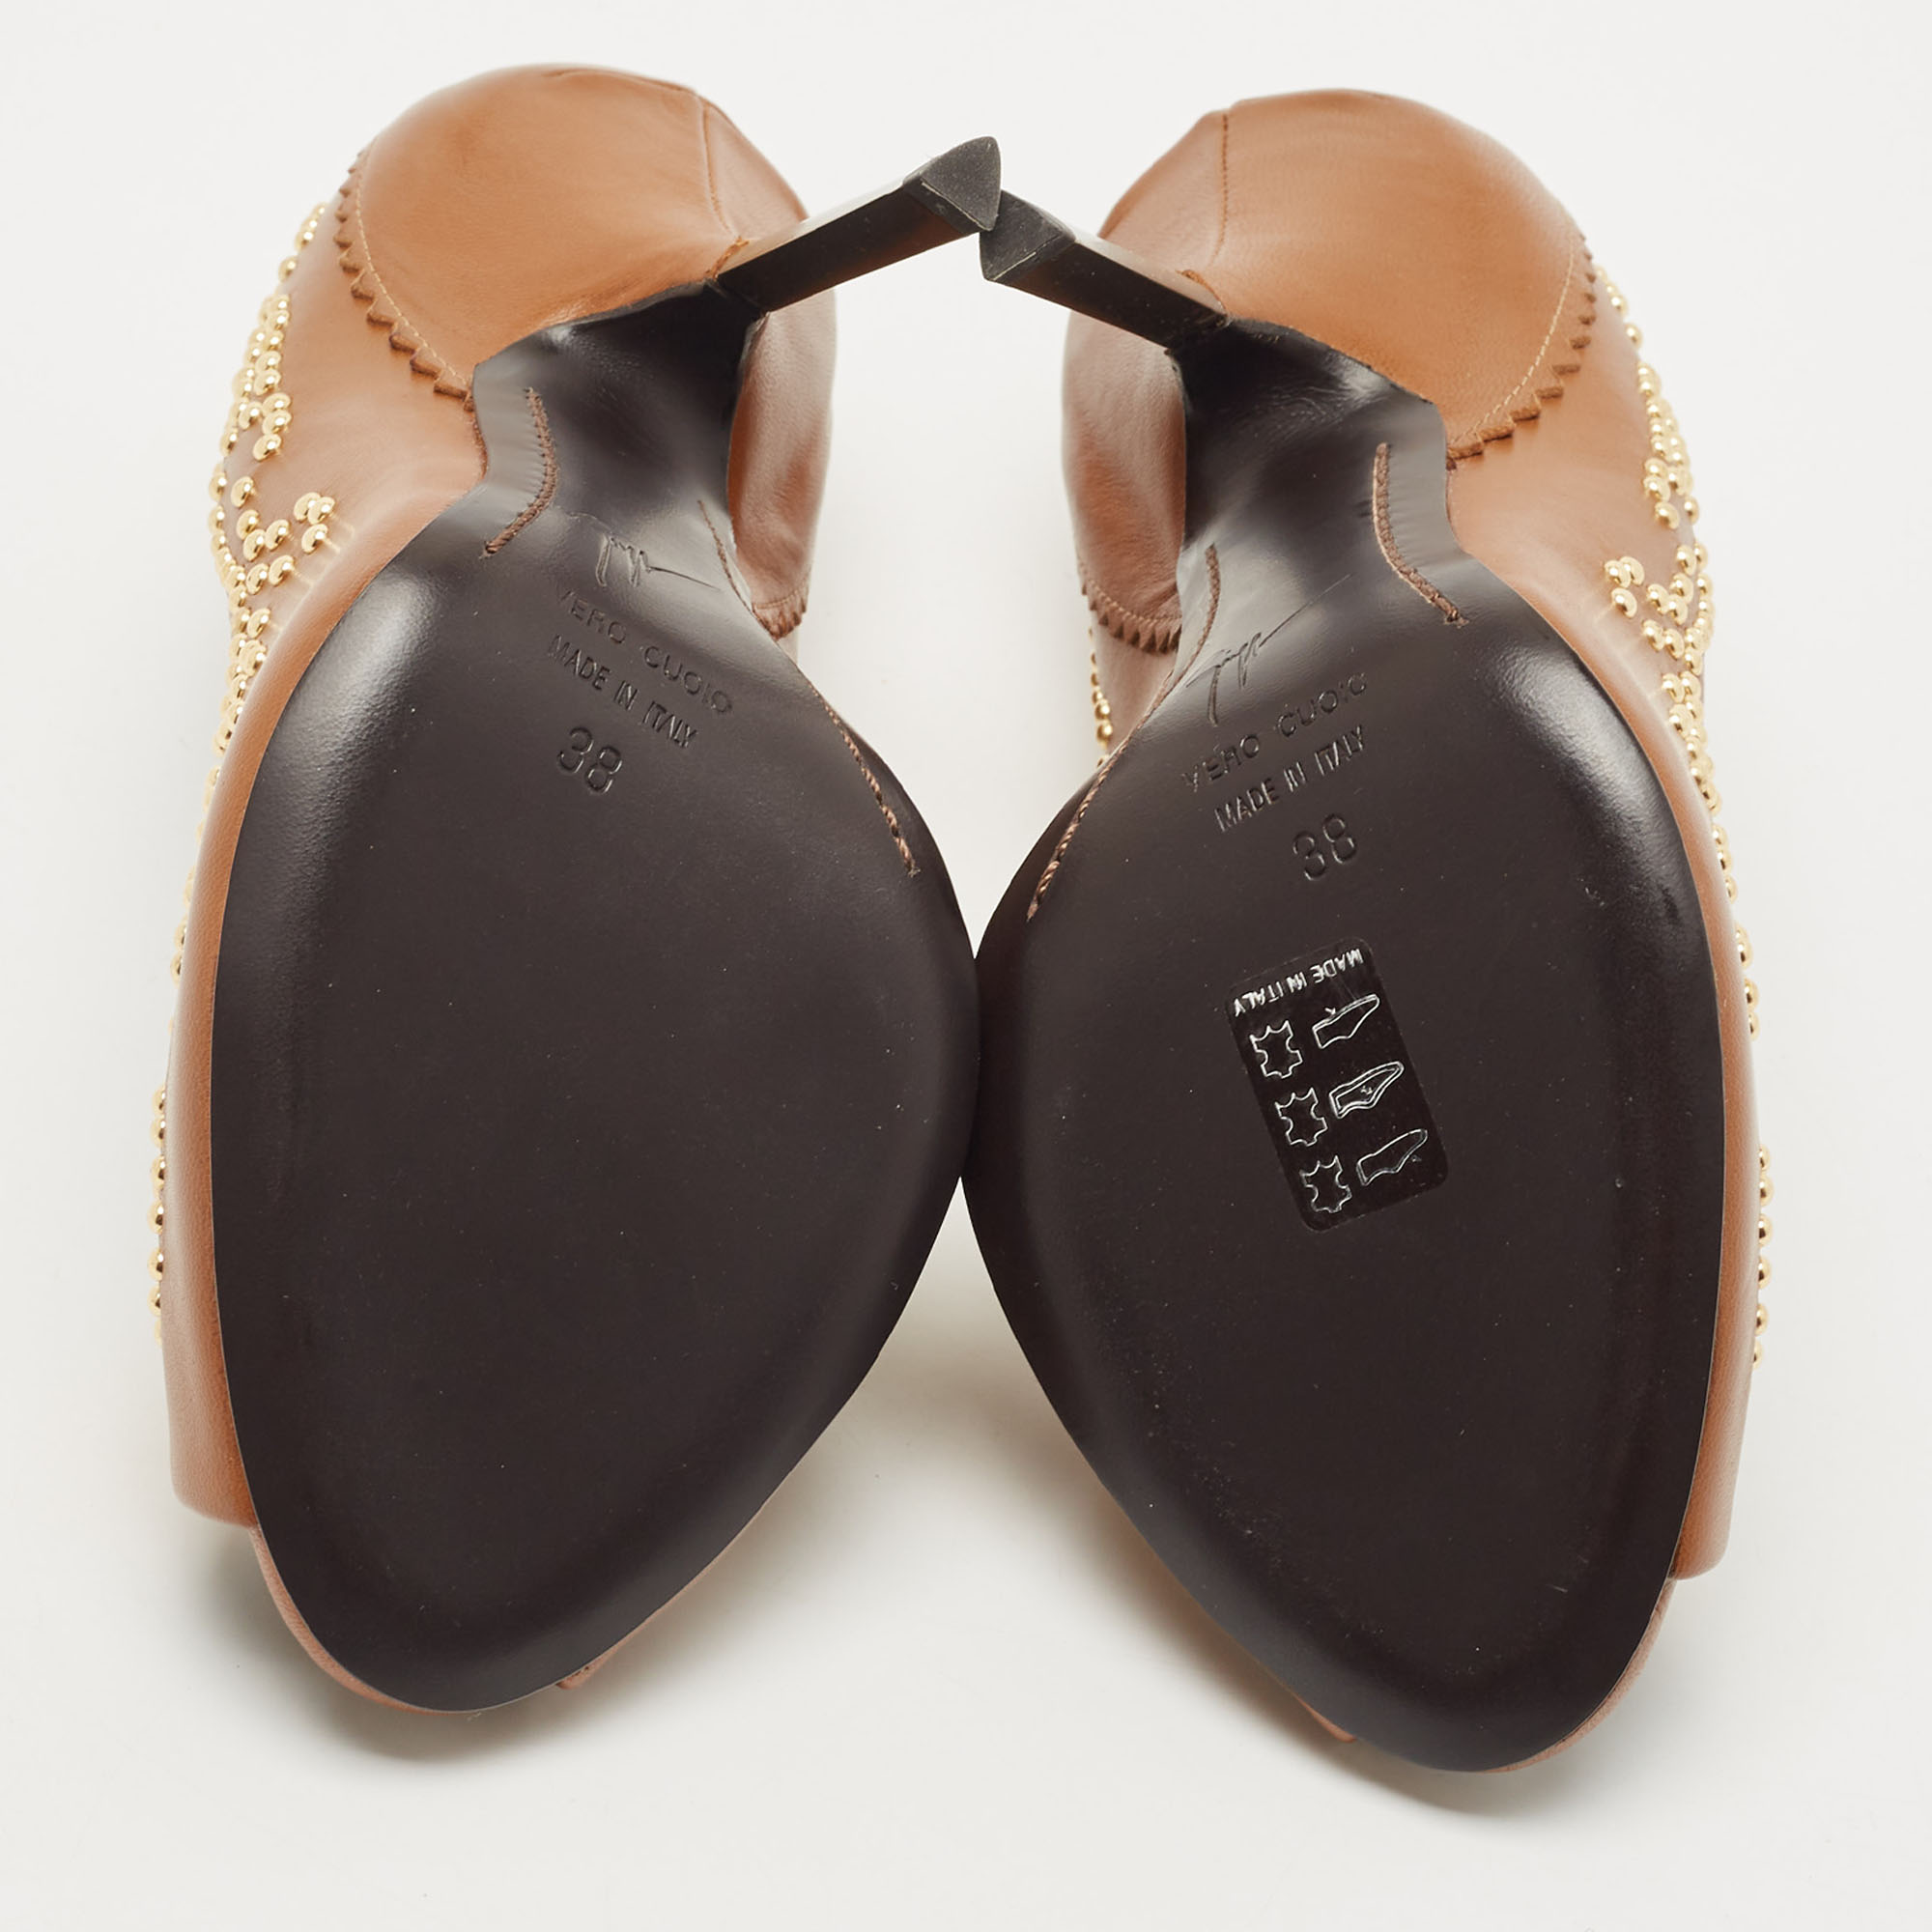 Giuseppe Zanotti Brown Studded Leather Peep Toe Pumps Size 38